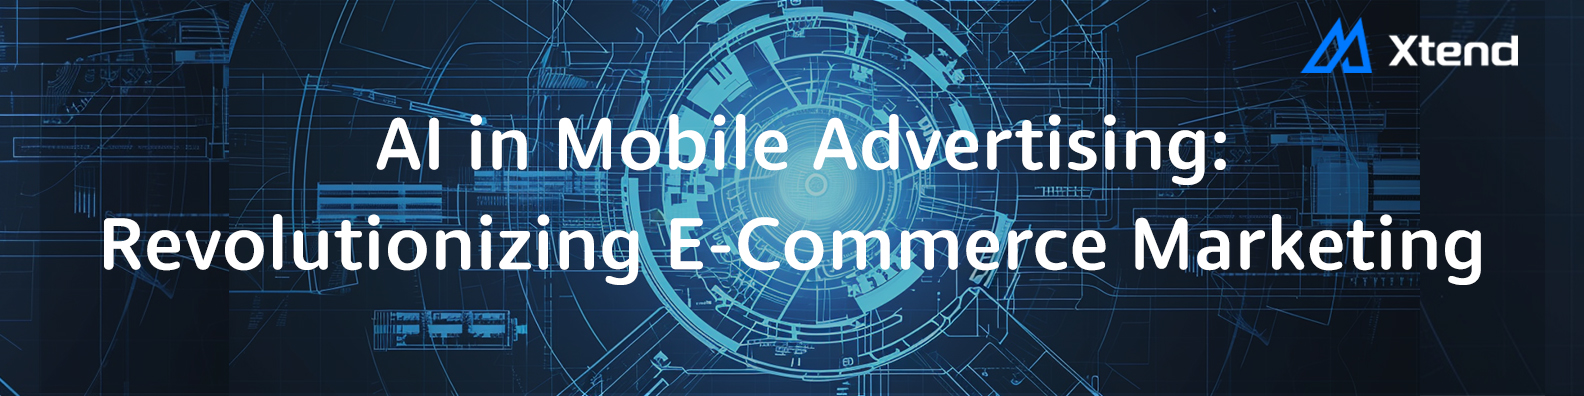 AI in Mobile Advertising: Revolutionizing E-Commerce Marketing